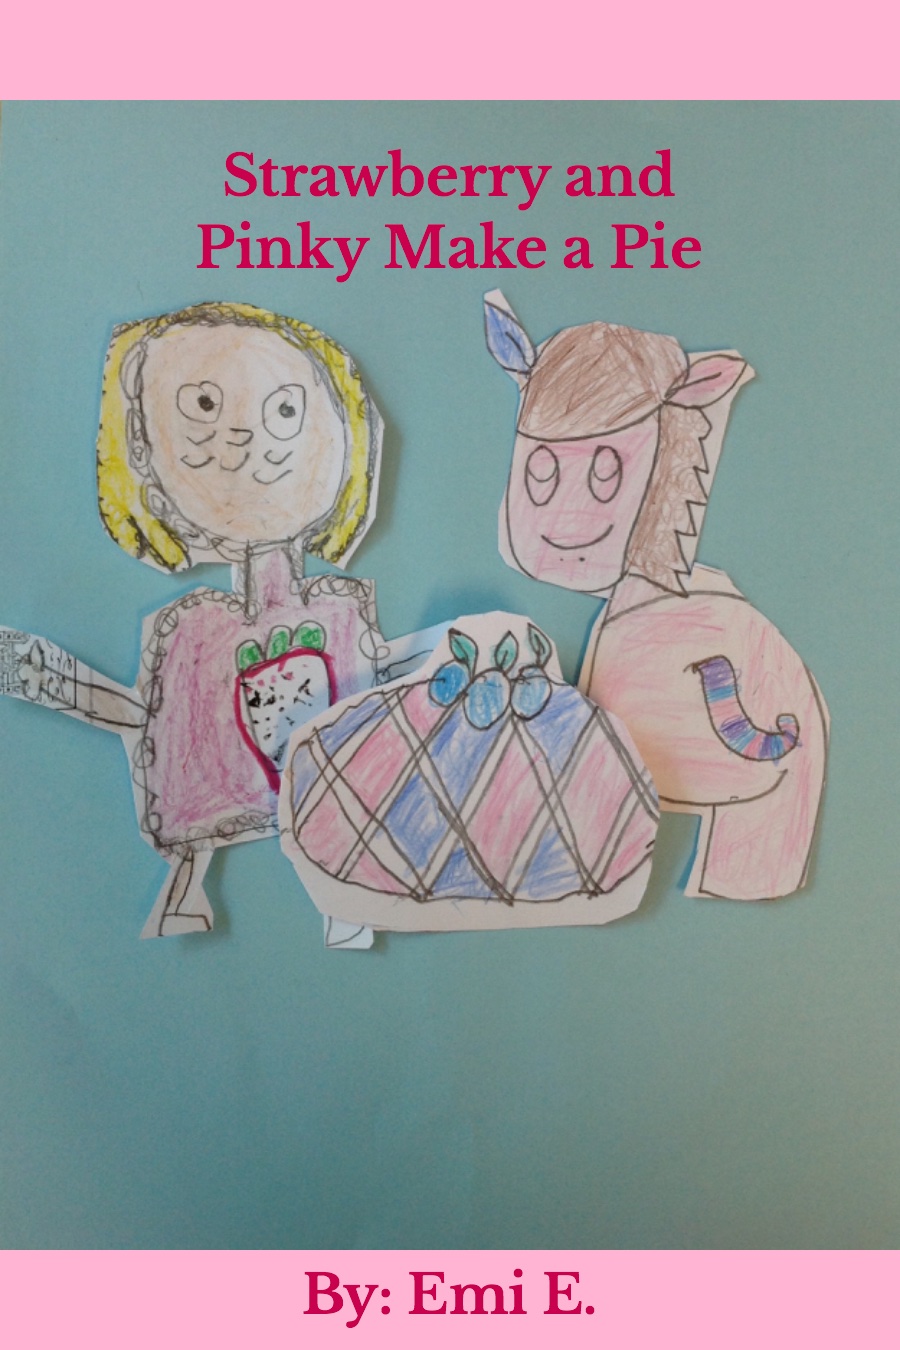 Strawberry and Pinky Make a Pie by Emi E